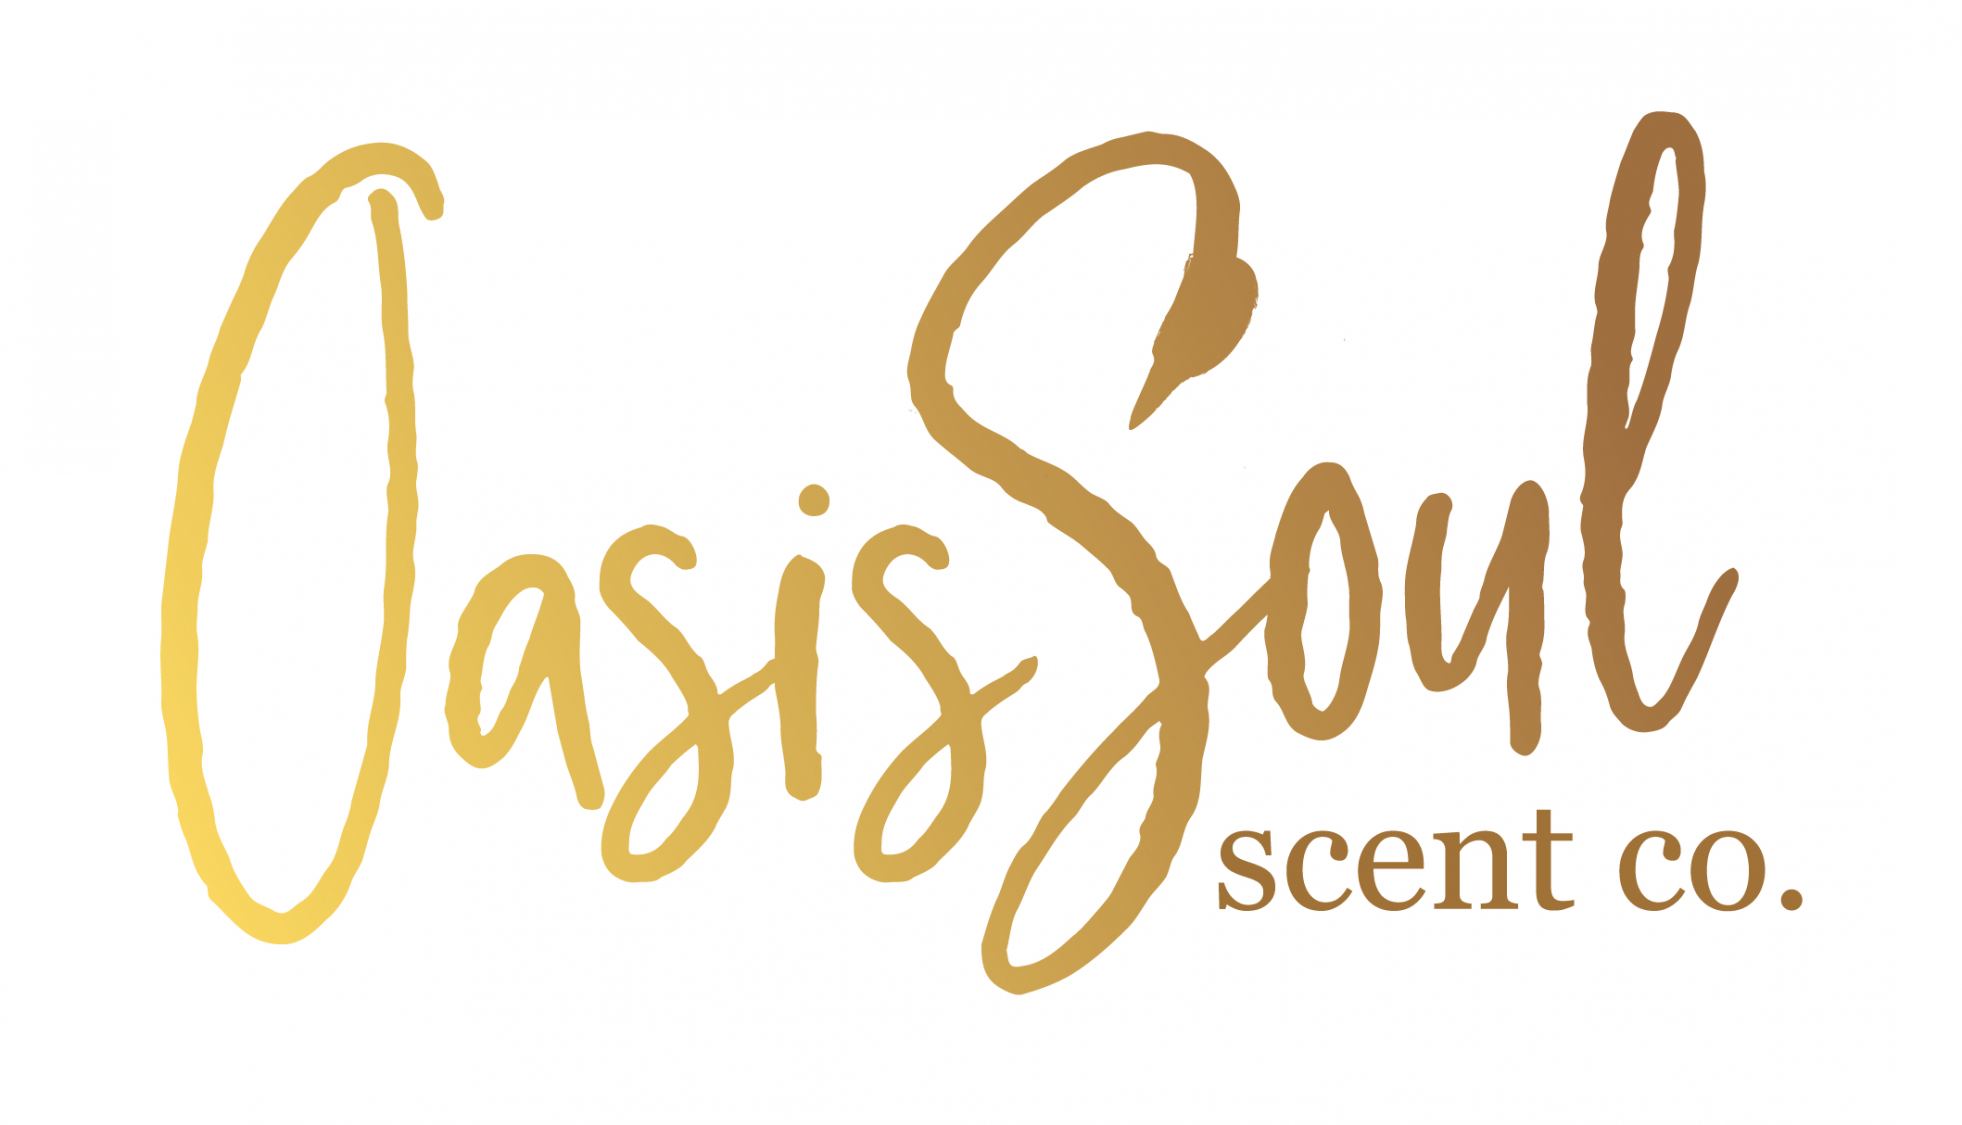 Oasis Soul Scent Co. Logo